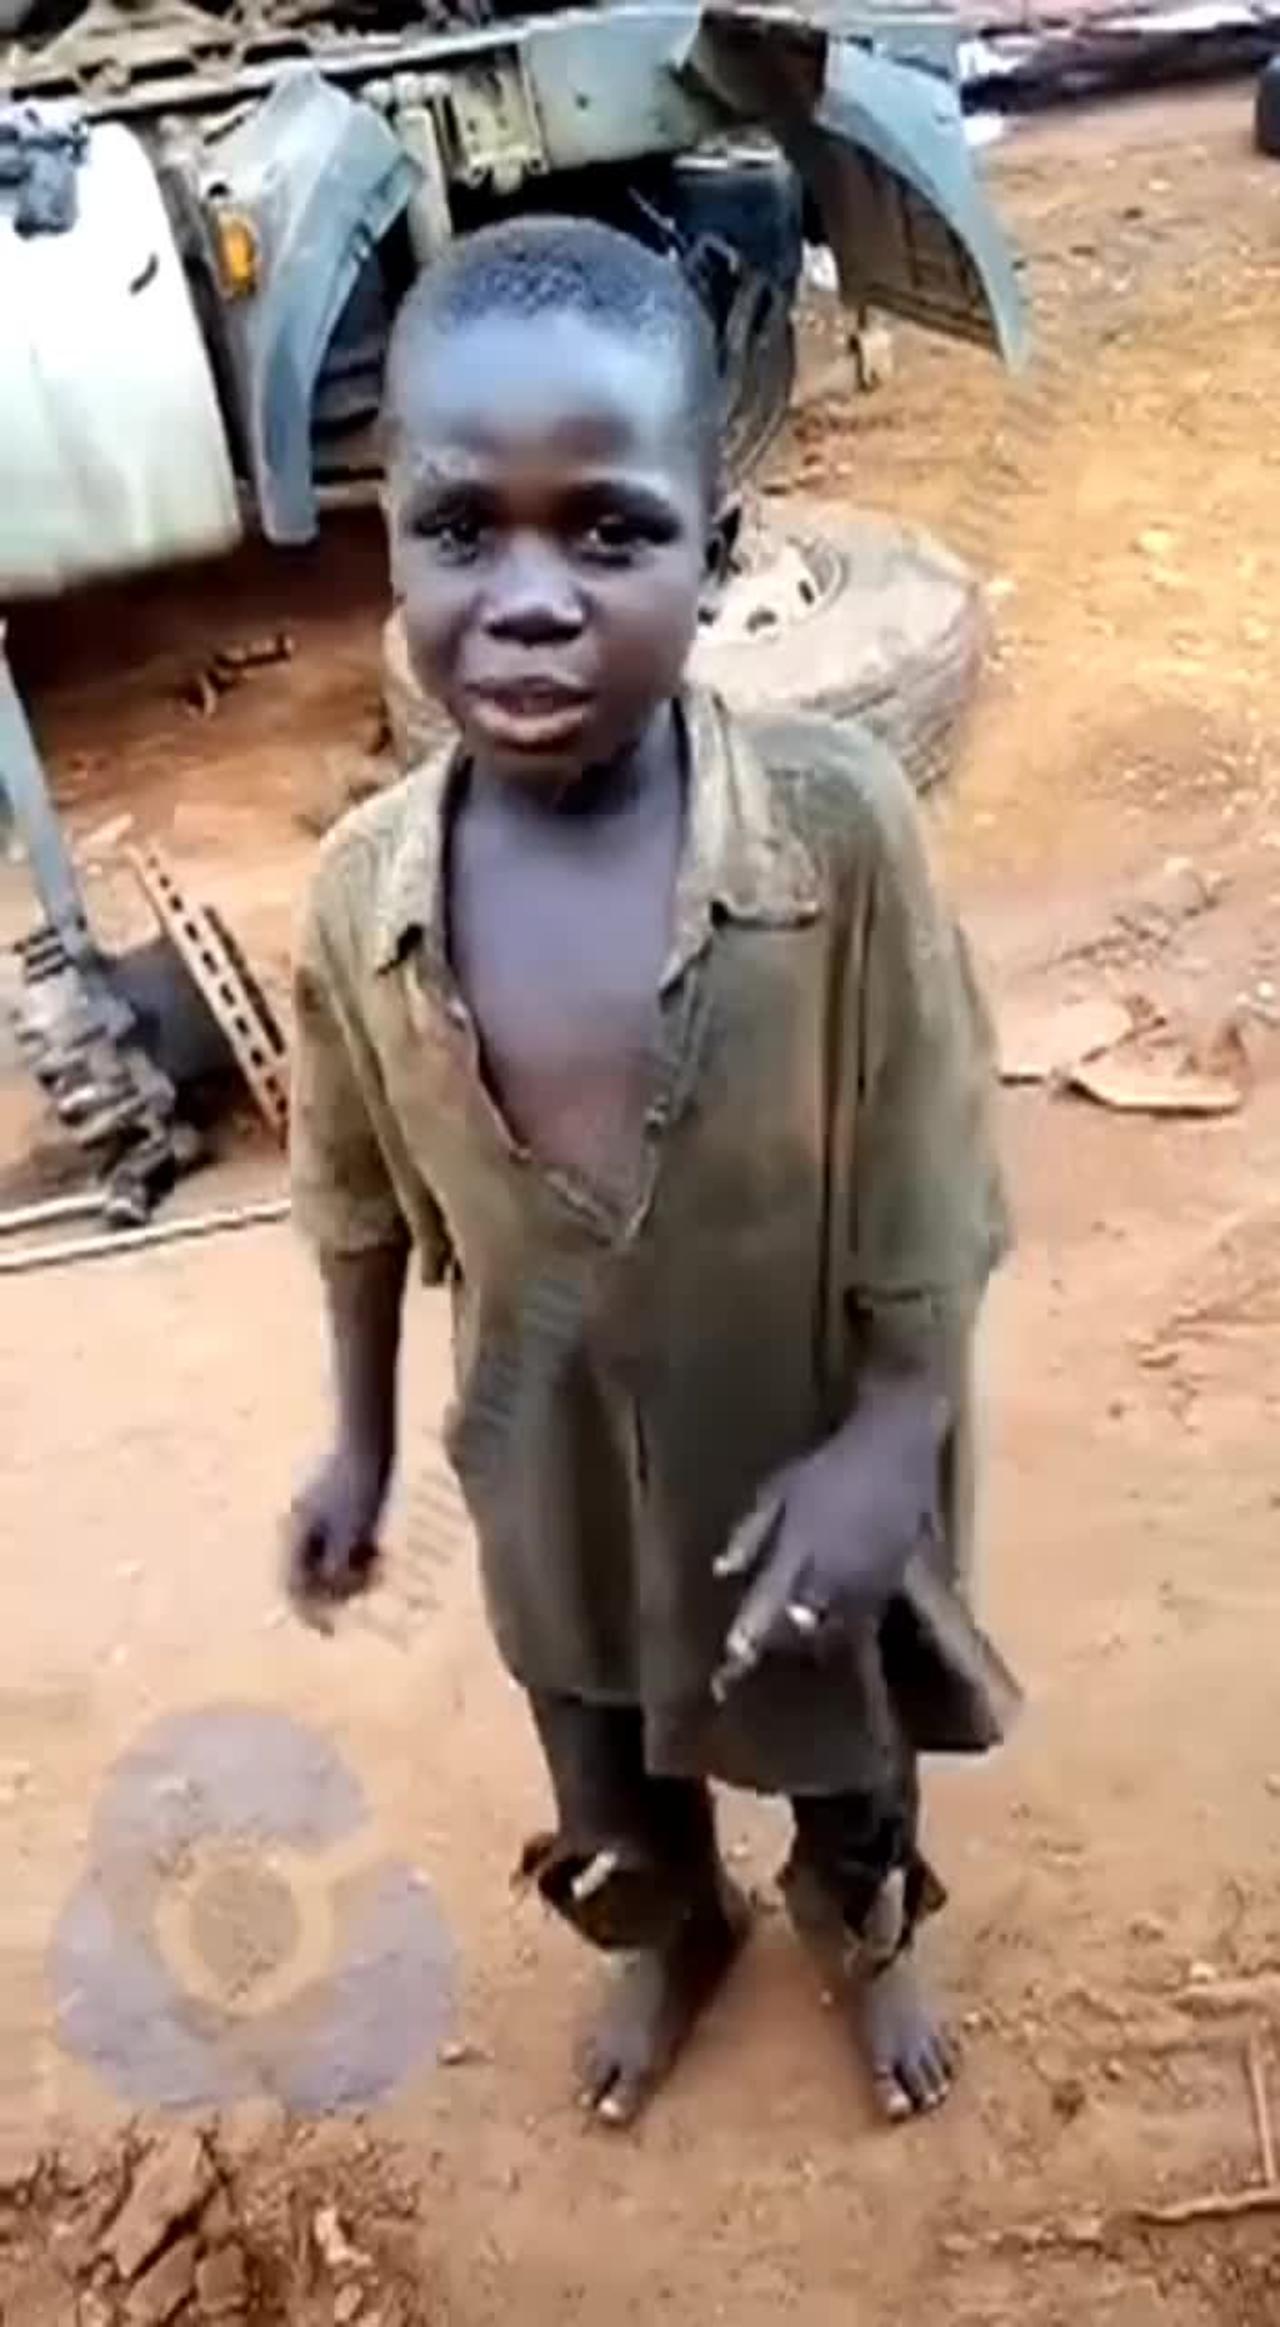 10-year-old boy mechanic was filmed speaking English